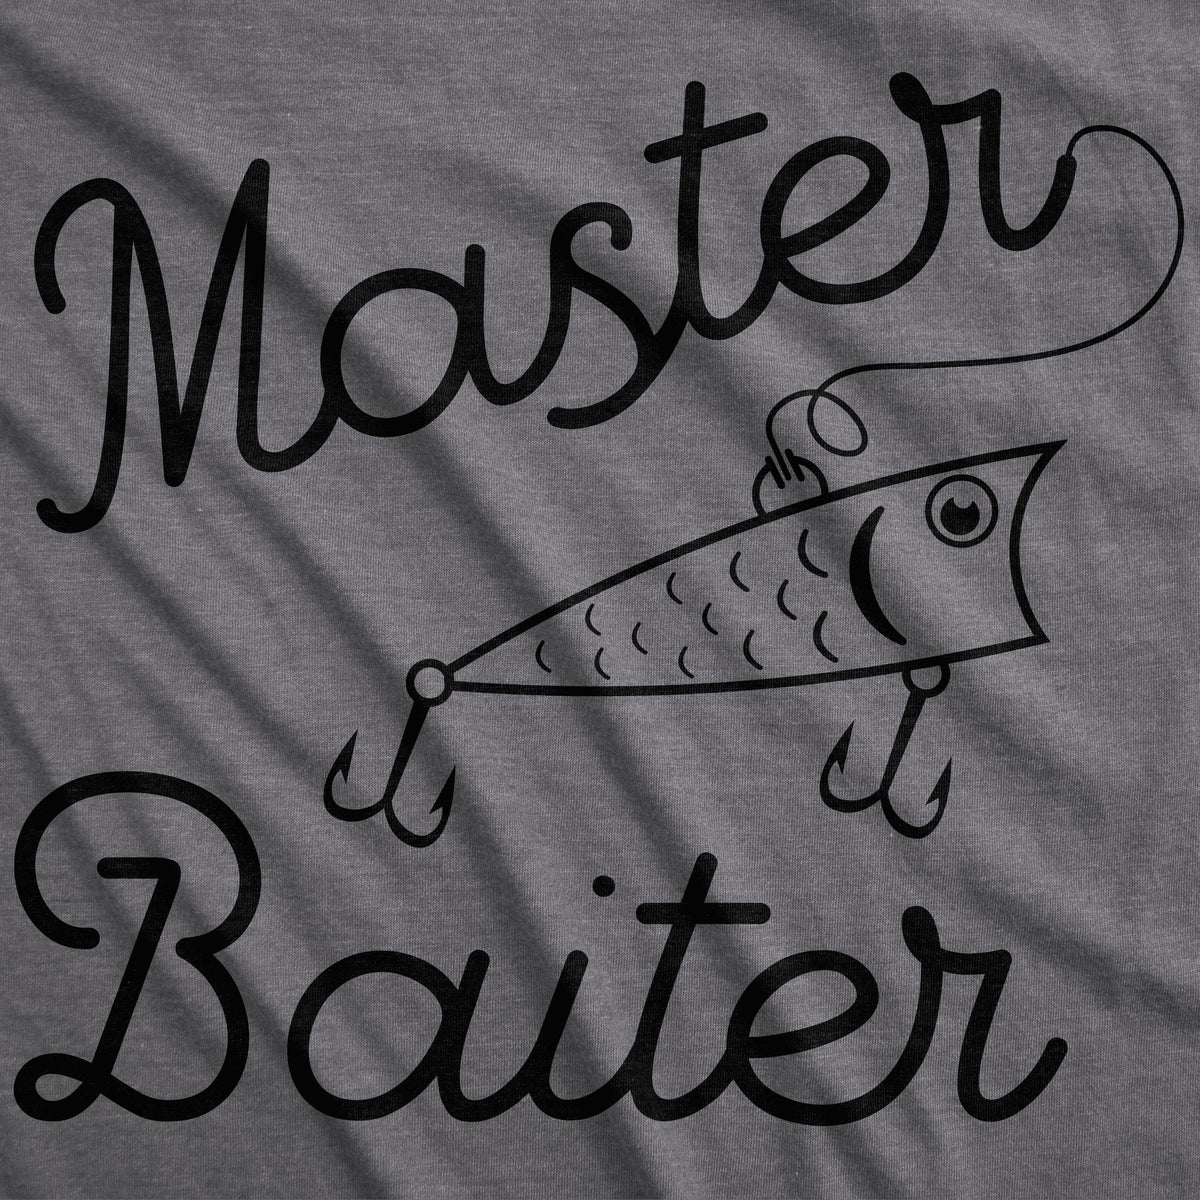 Master Baiter Fish Men's T Shirt - Crazy Dog T-Shirts